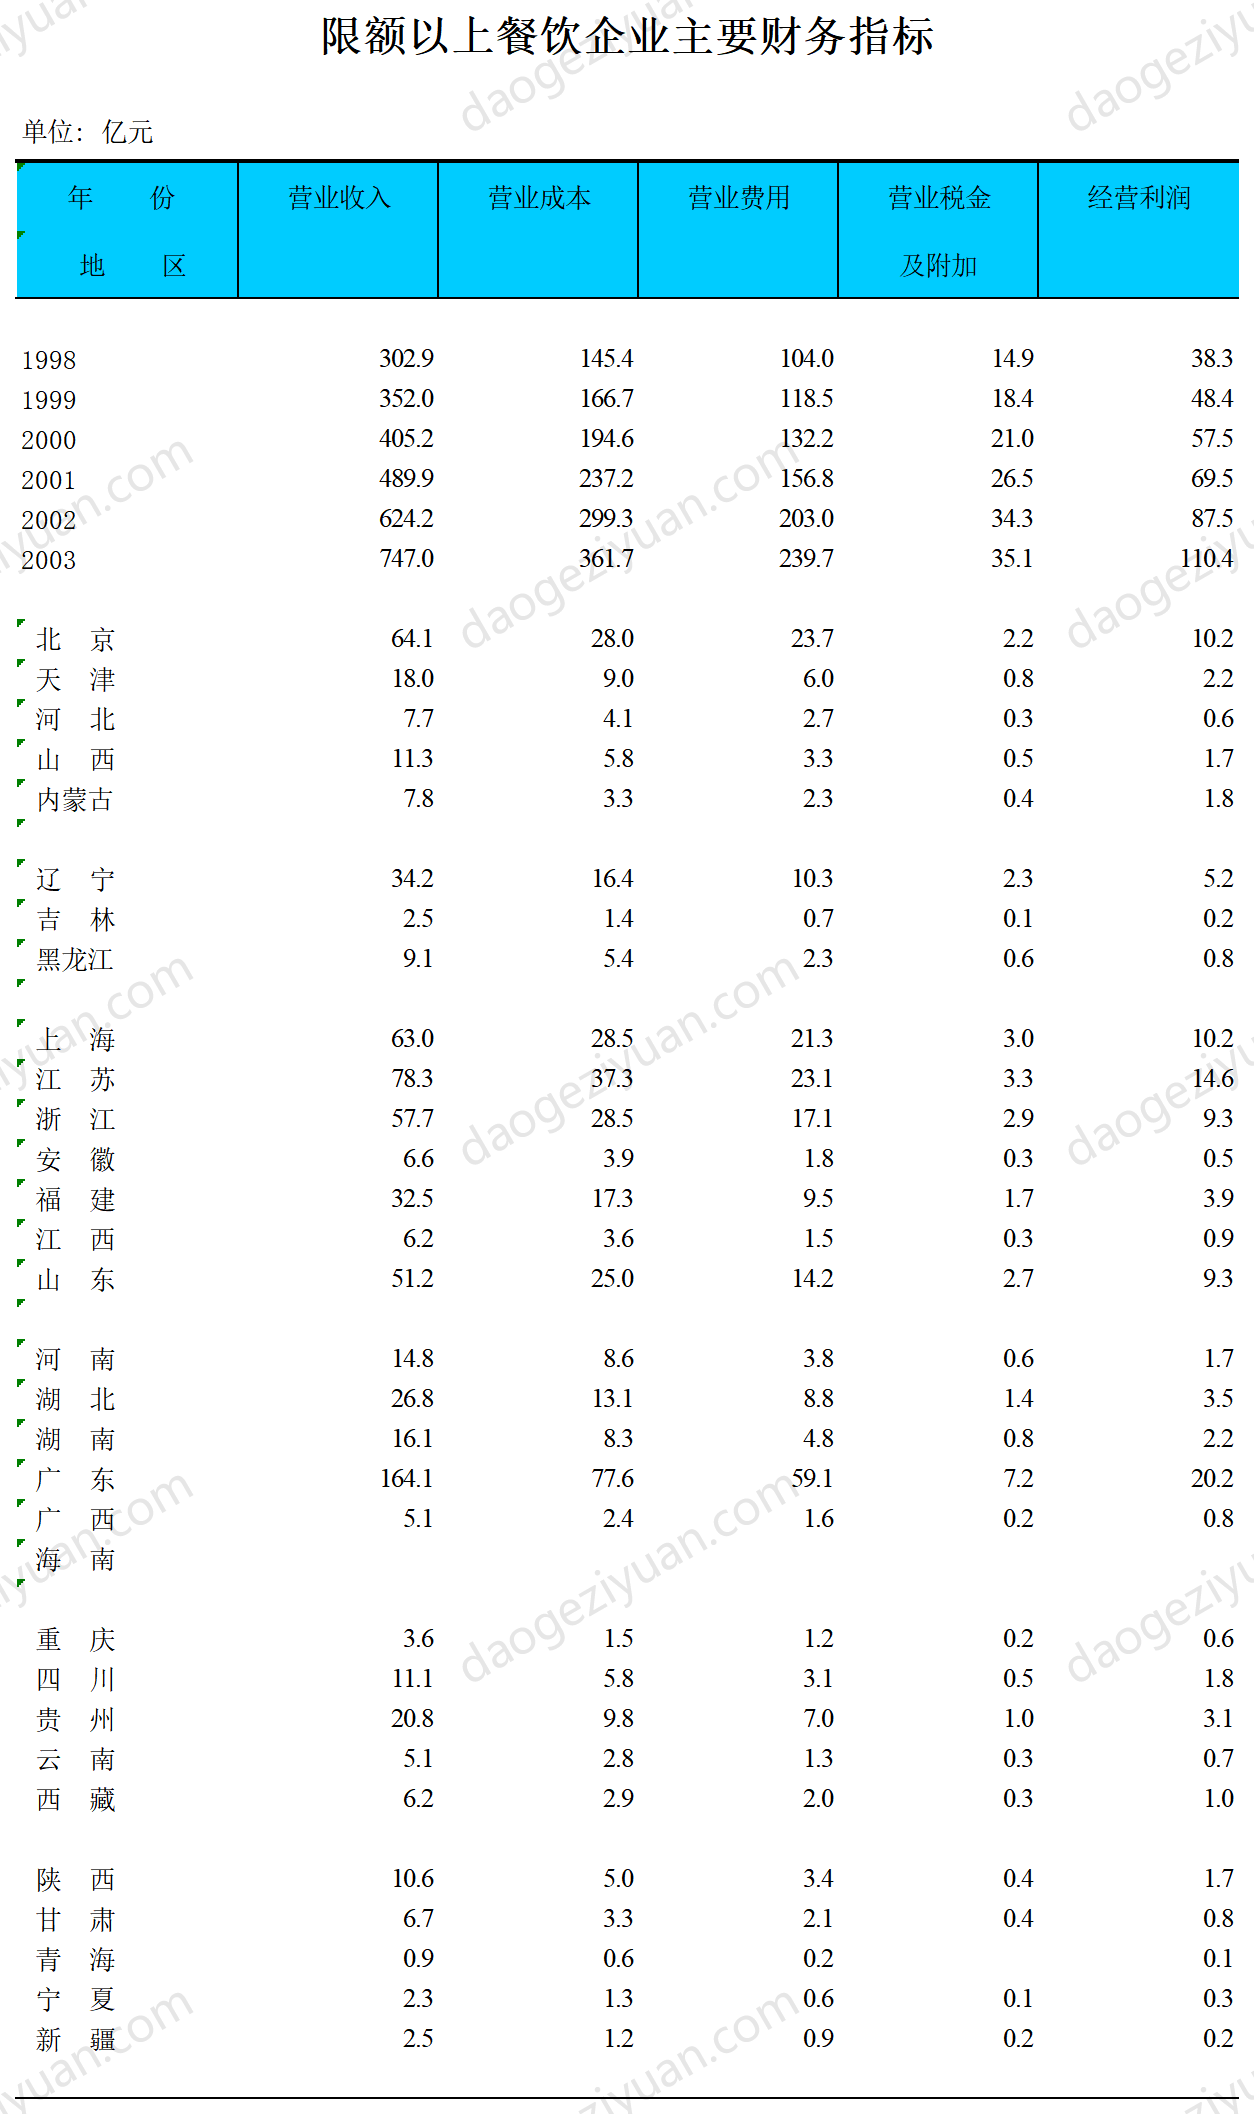 Main financial indicators of catering enterprises above designated size.xls